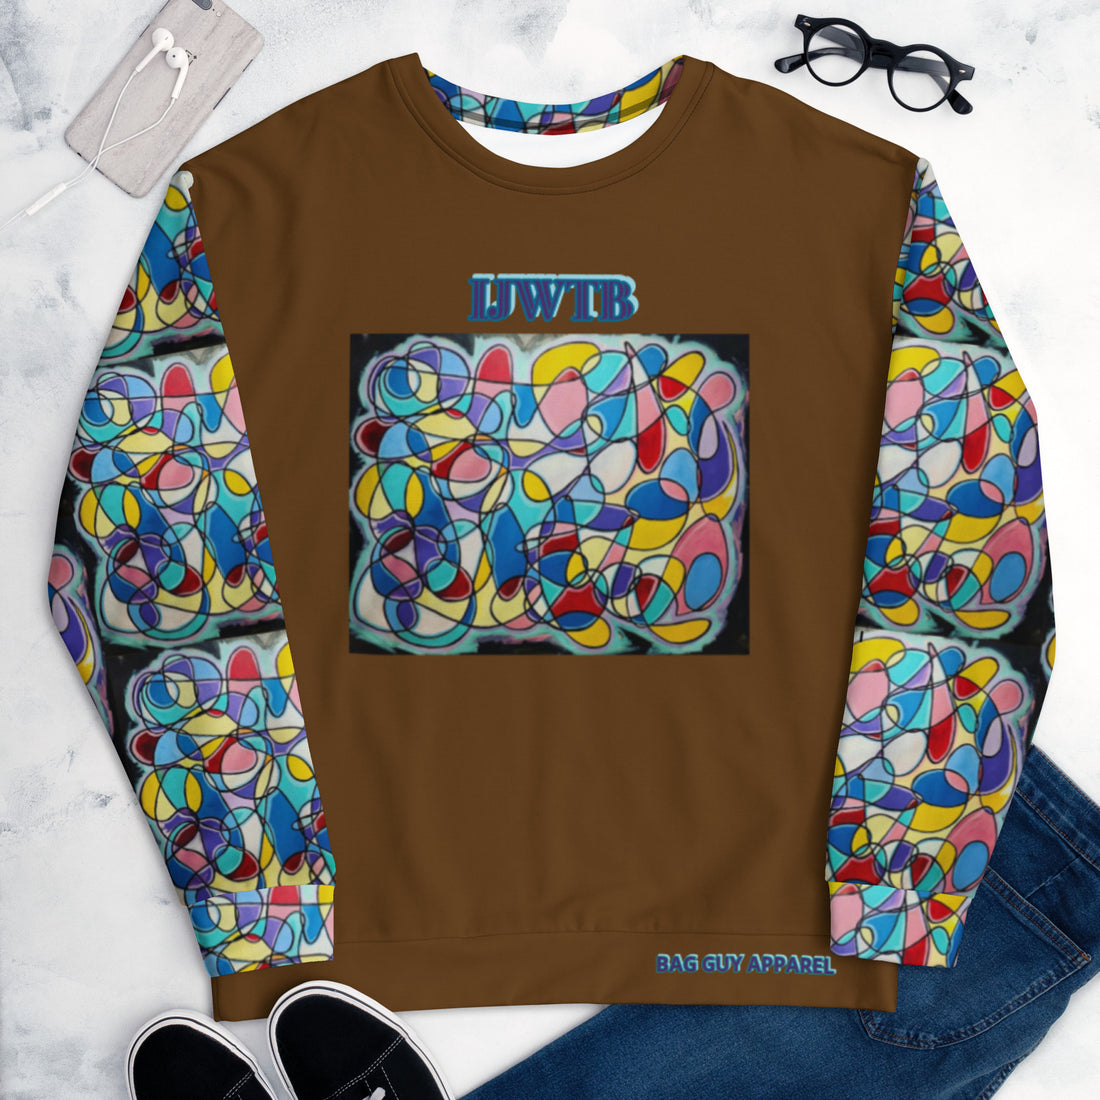 I.J.W.T.B./ Derrick Sampson collabo Special Edition Unisex Sweatshirt